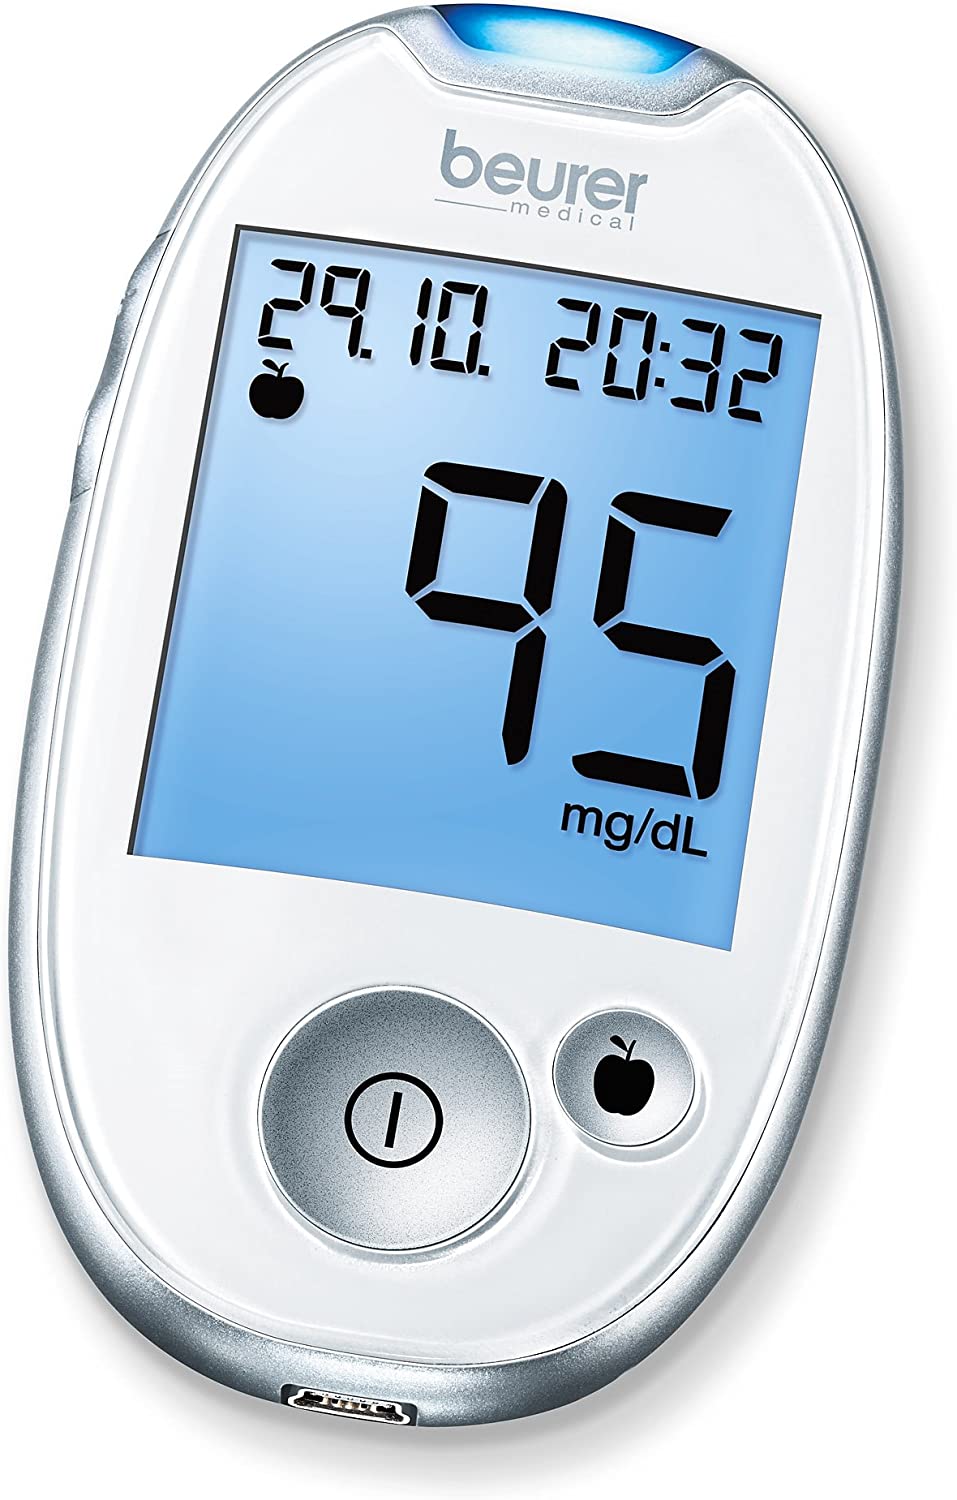 Beurer GL 44mg/dl Blood Glucose Monitor White